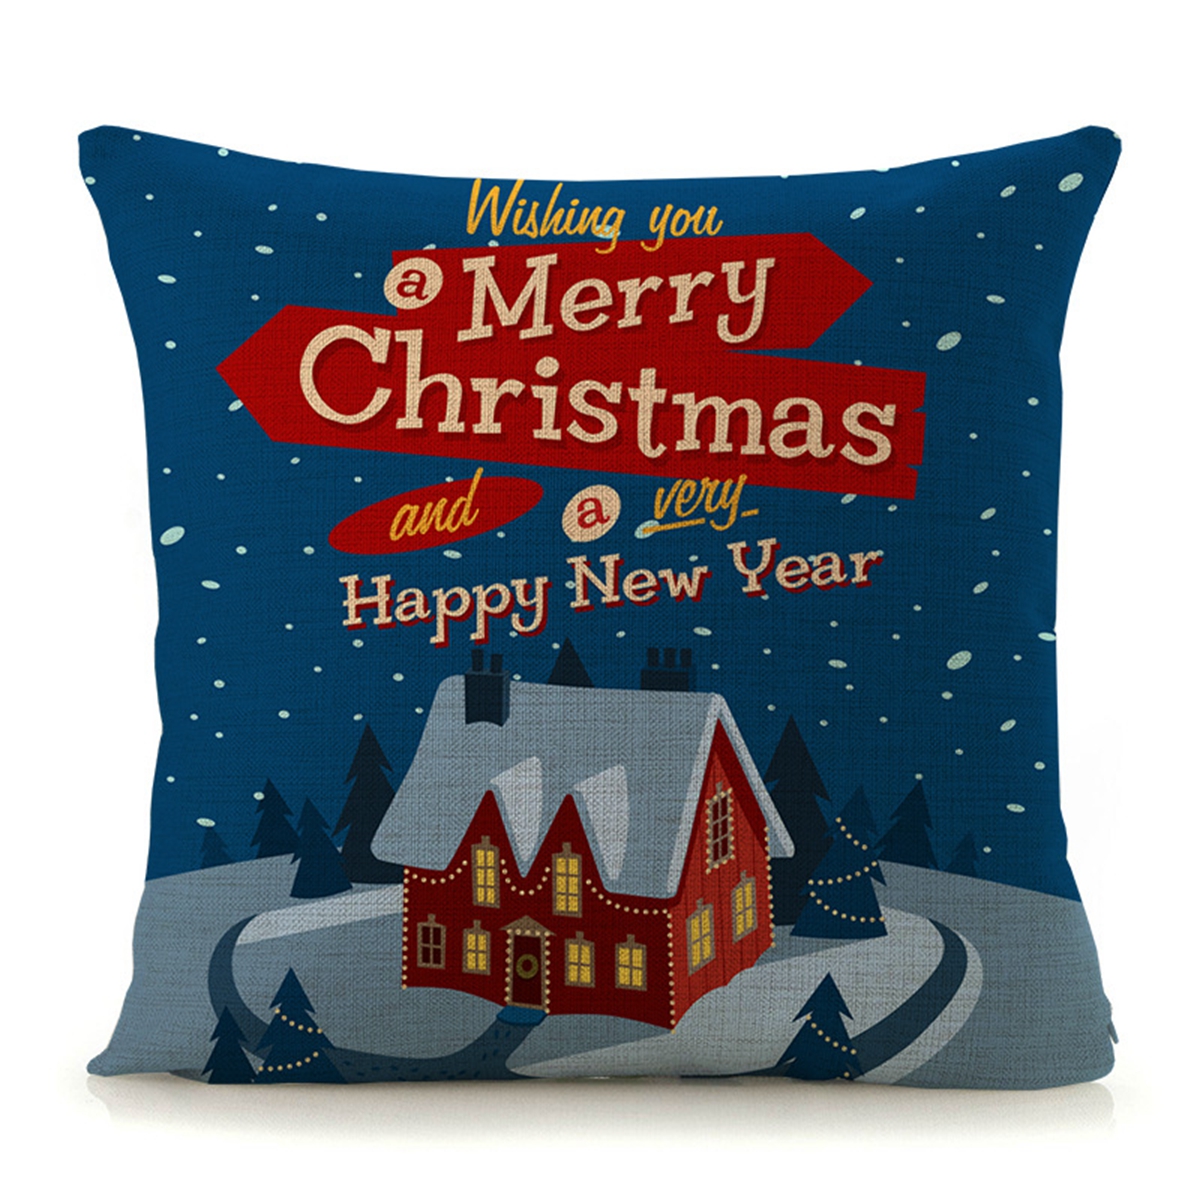 18-Christmas-Cotton-Pillow-Case-Linen-Cushion-Cover-Merry-Christmas-Home-Decoration-1366699